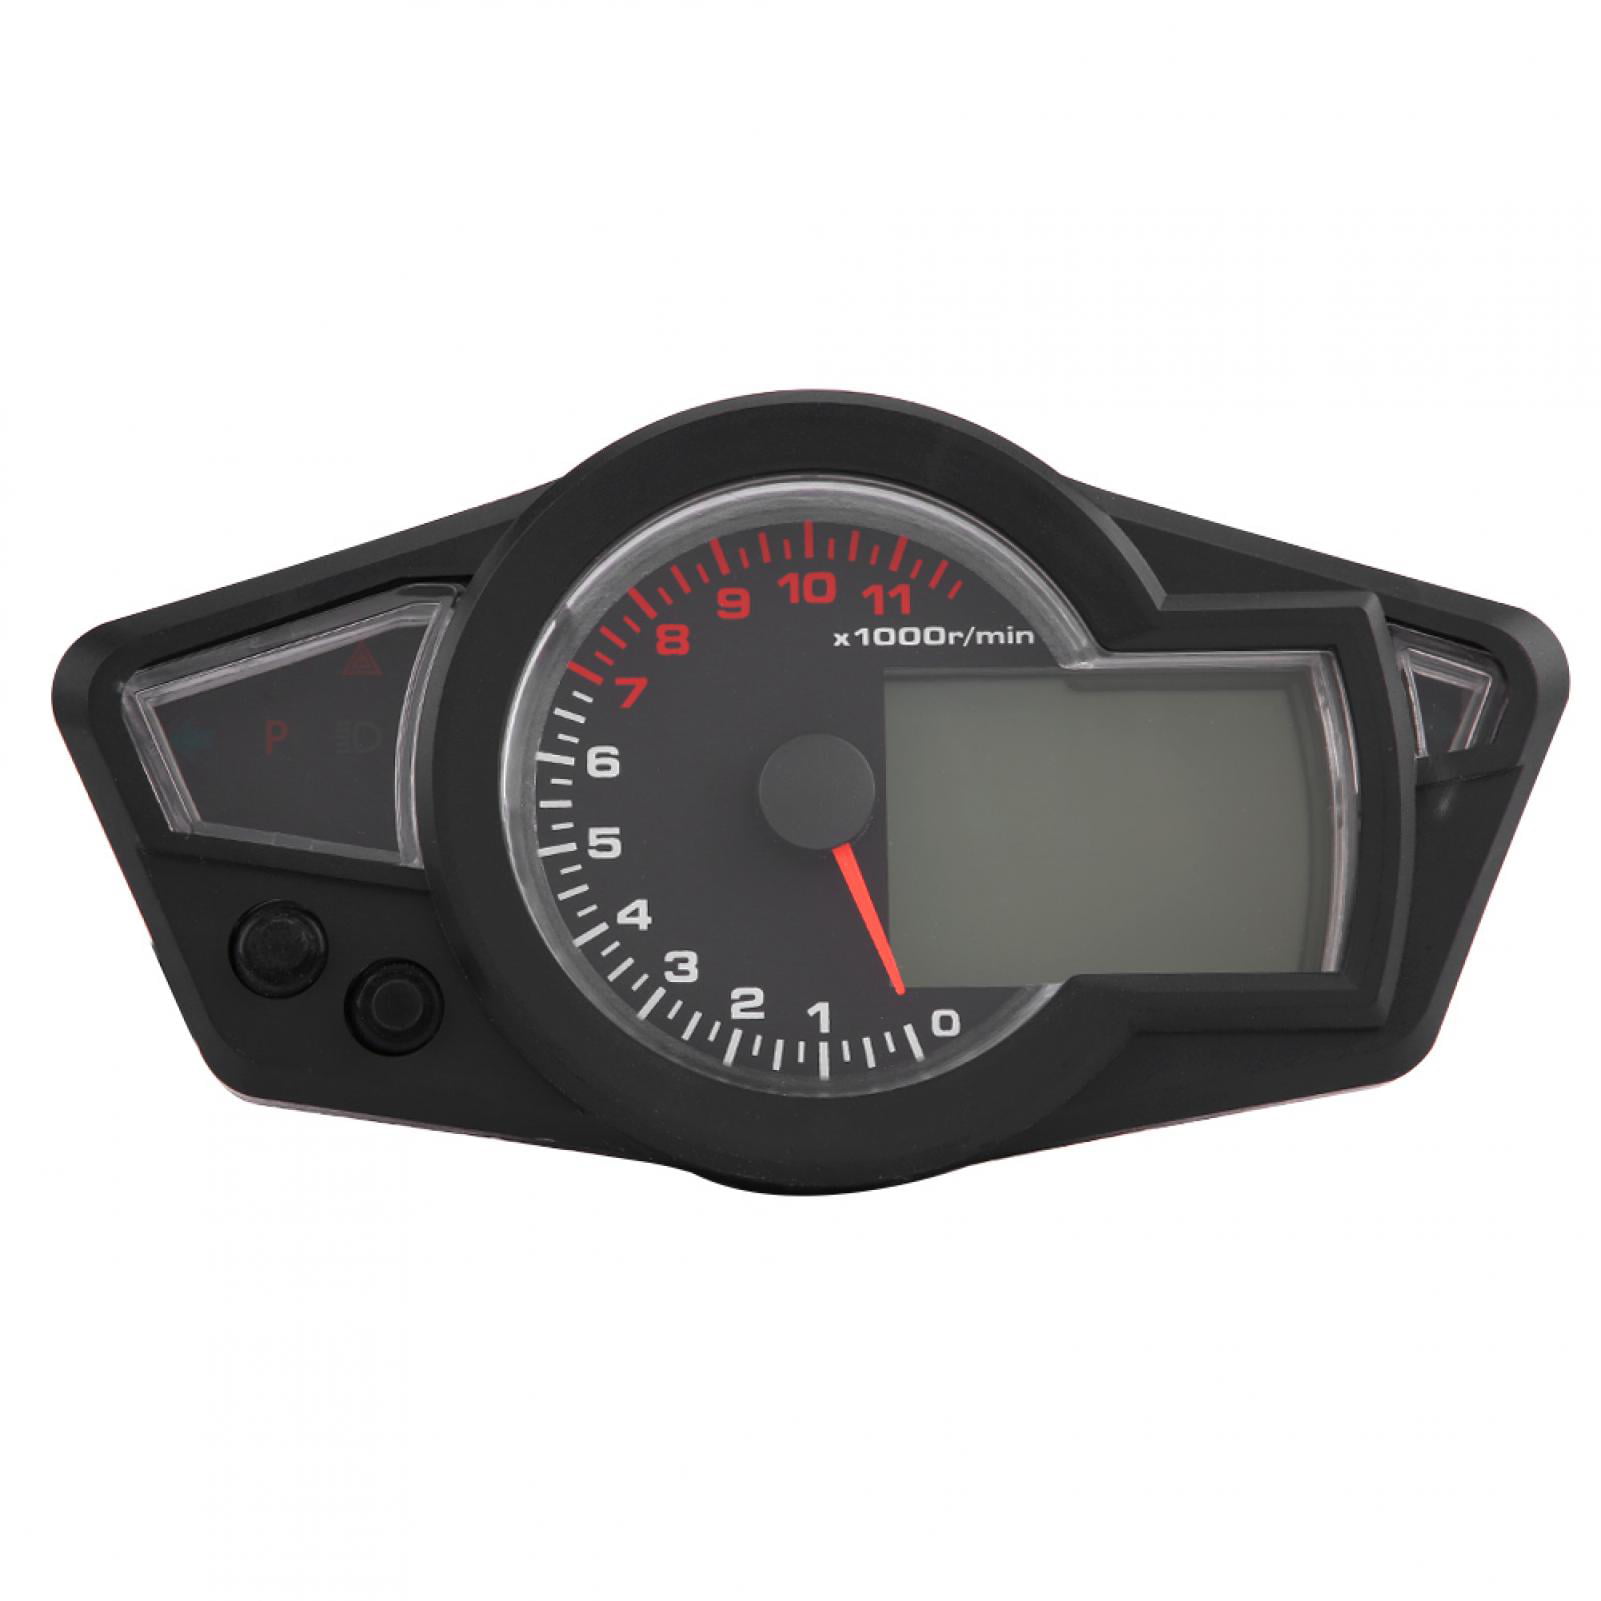 DC 12V Universal 15000RPM Motorcycle LCD Digital Odometer Speedometer Tachometer with Speed Sensor